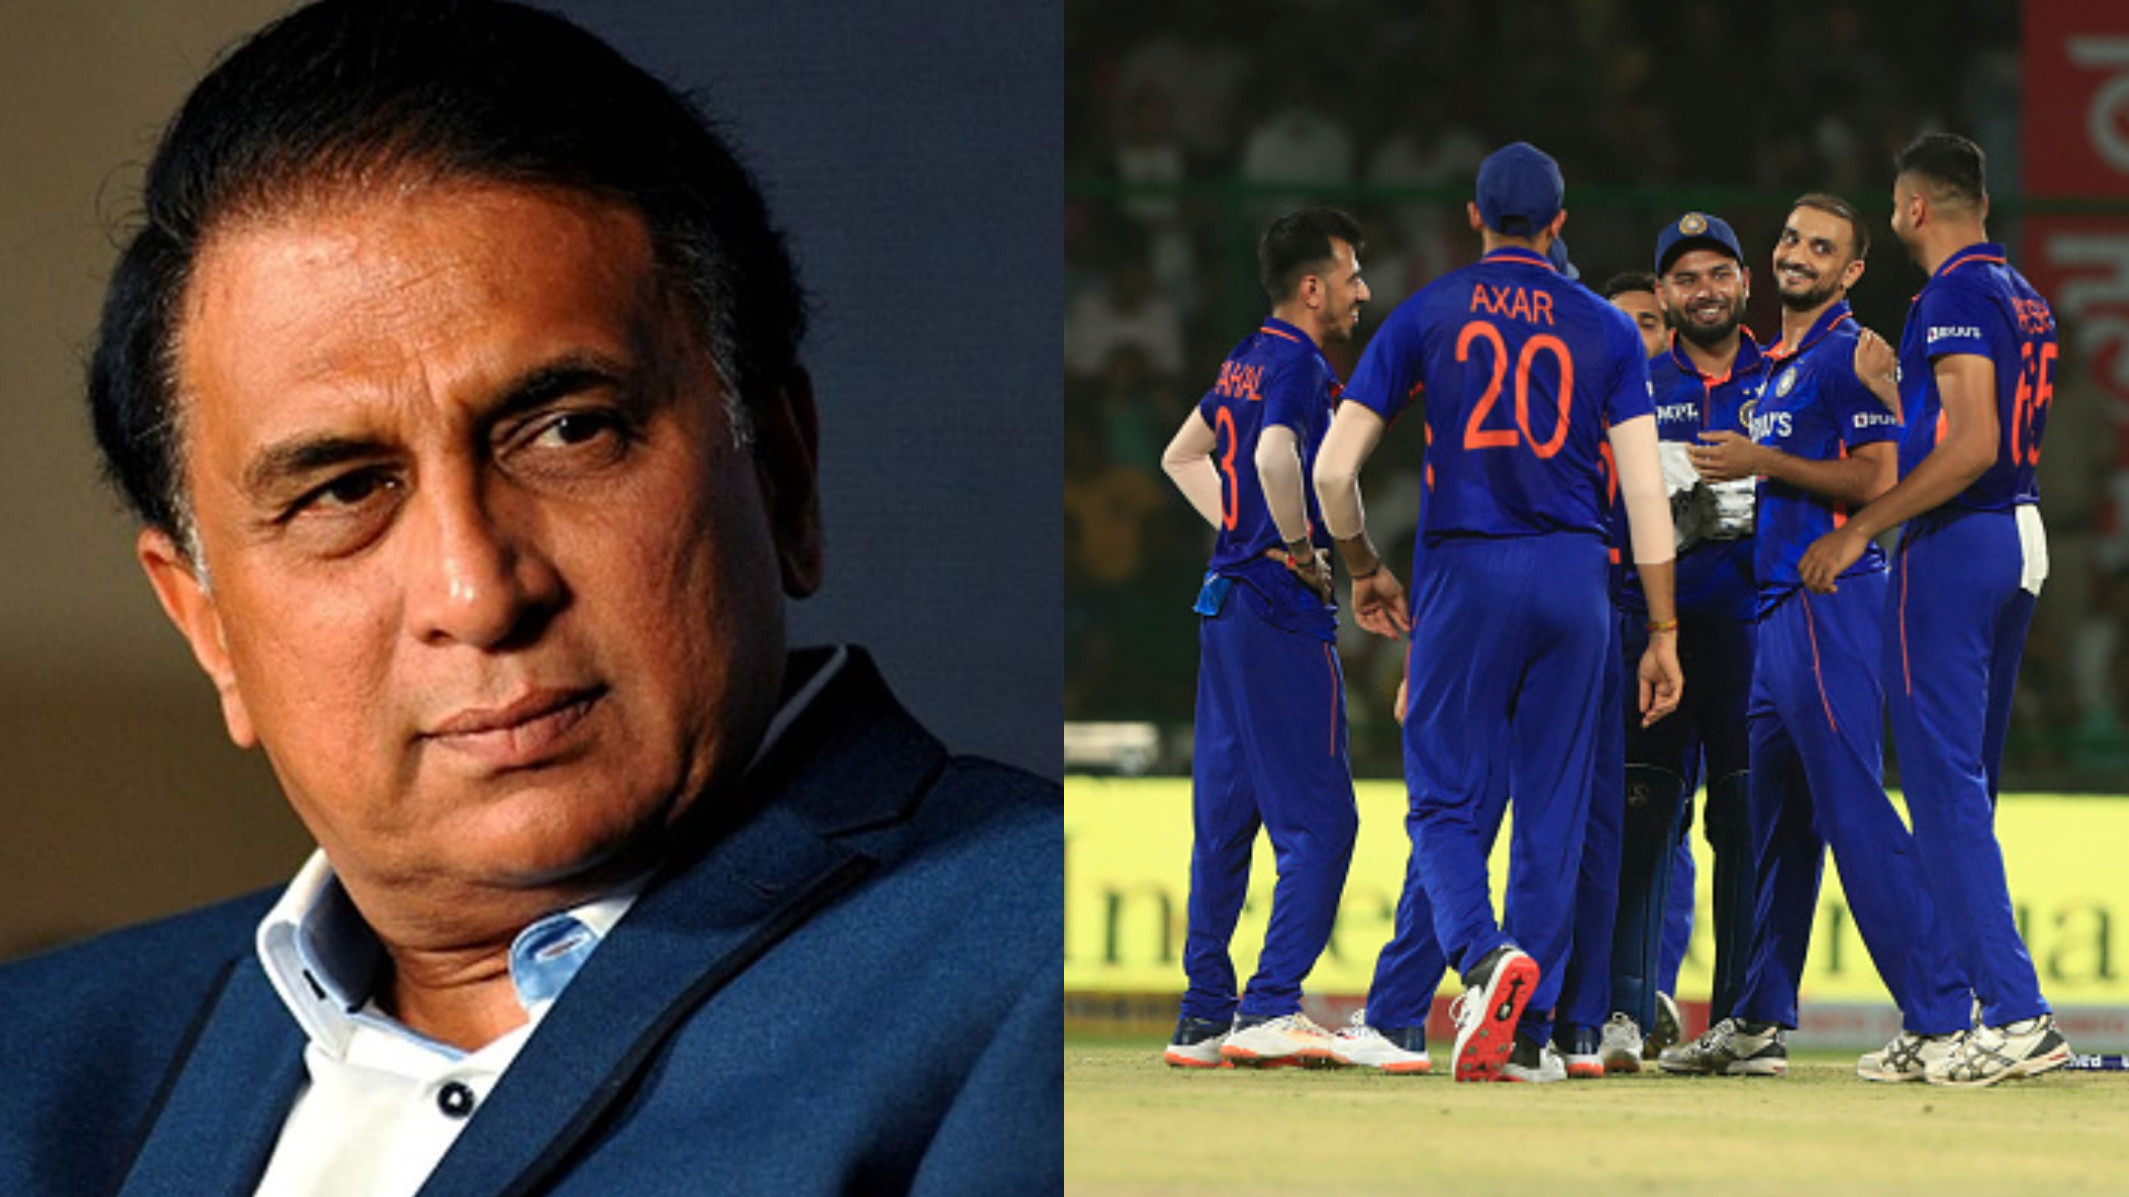 IND v SA 2022: Sunil Gavaskar finds two big positives for Team India despite loss in 1st T20I vs SA